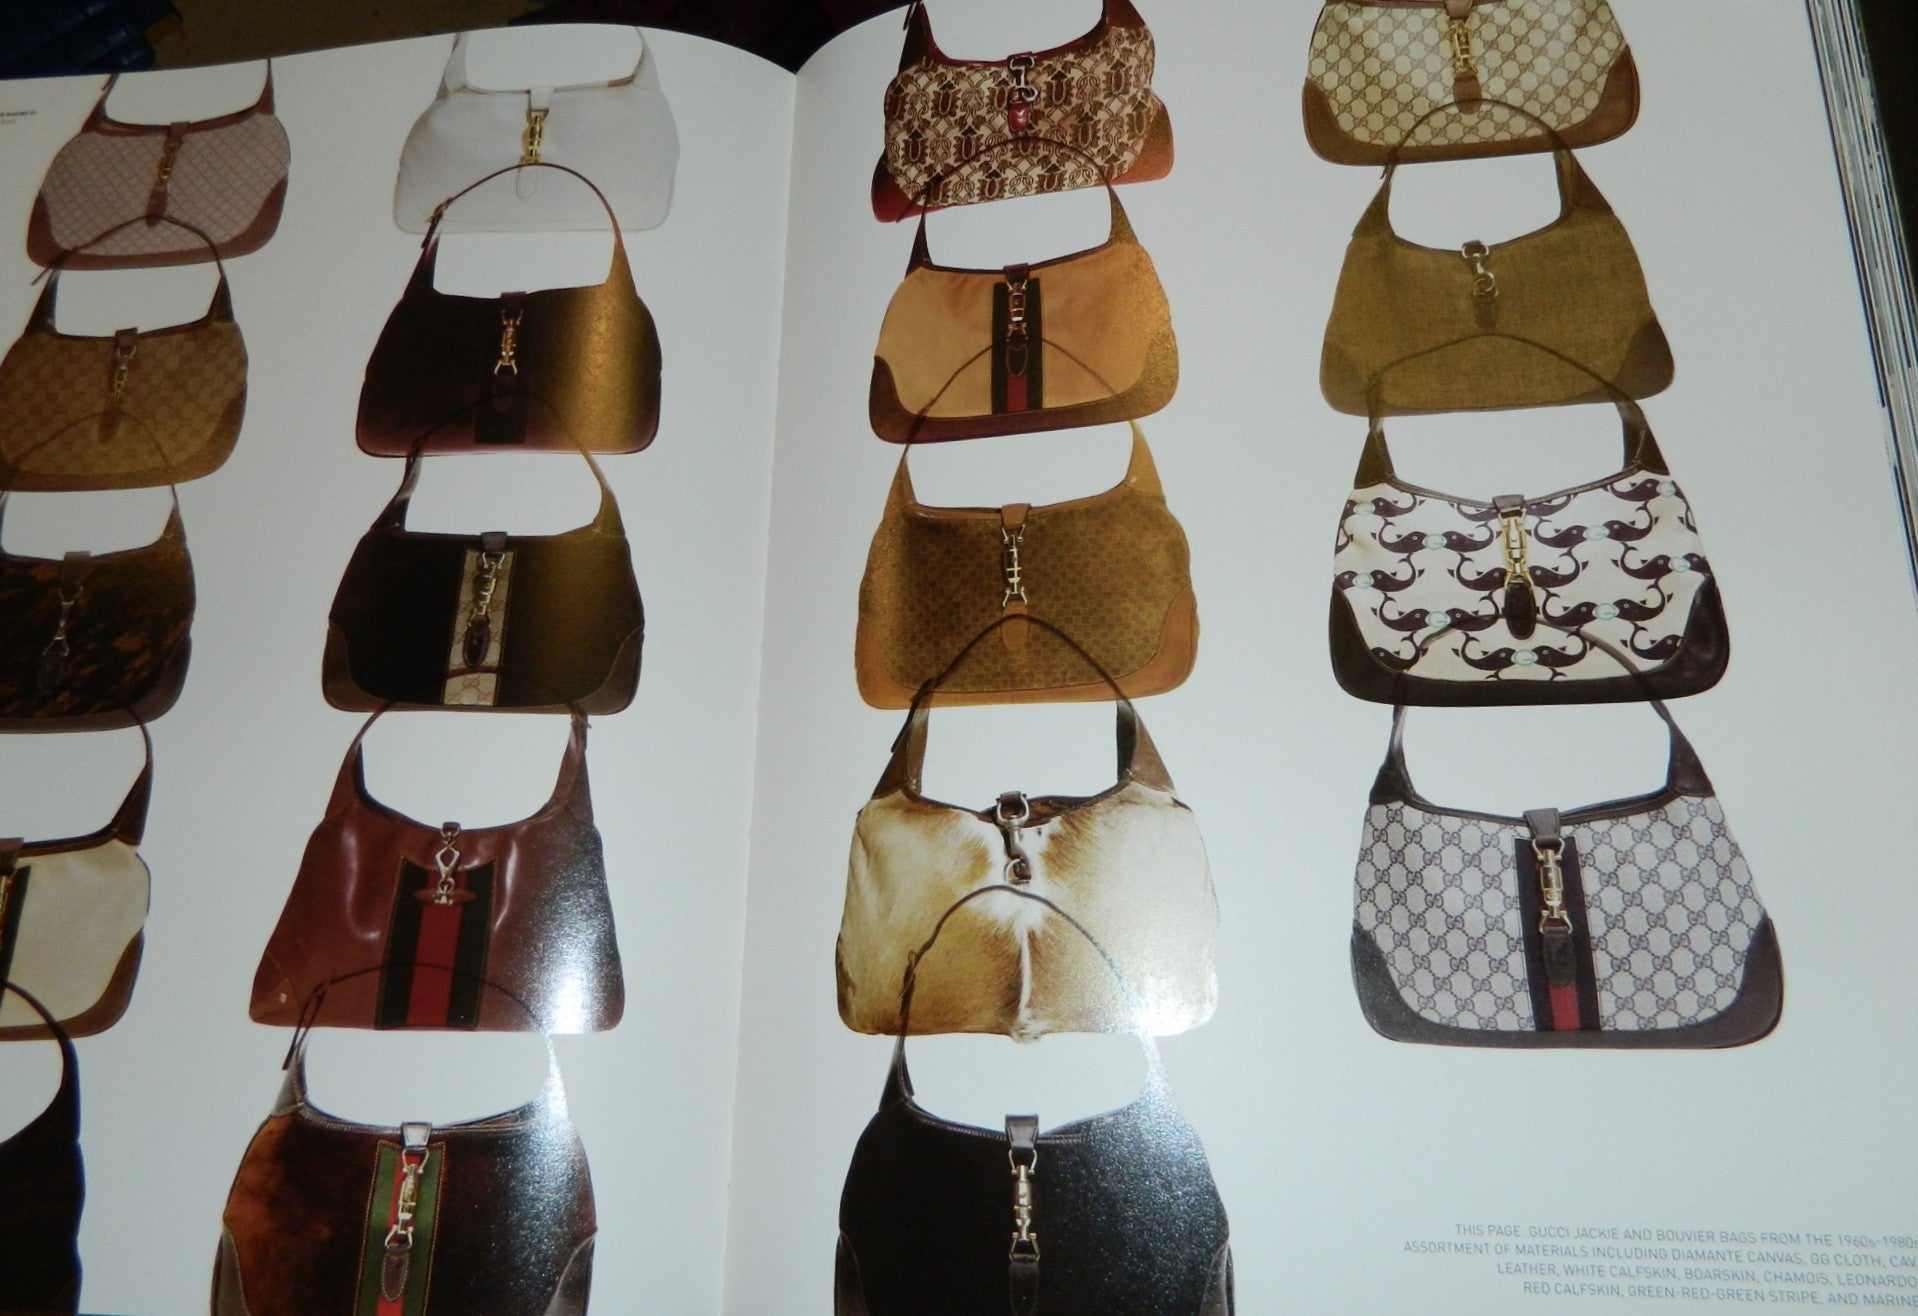 Buy 1960s Vintage Authentic Gucci Bordeaux Leather Handbag Online in India  